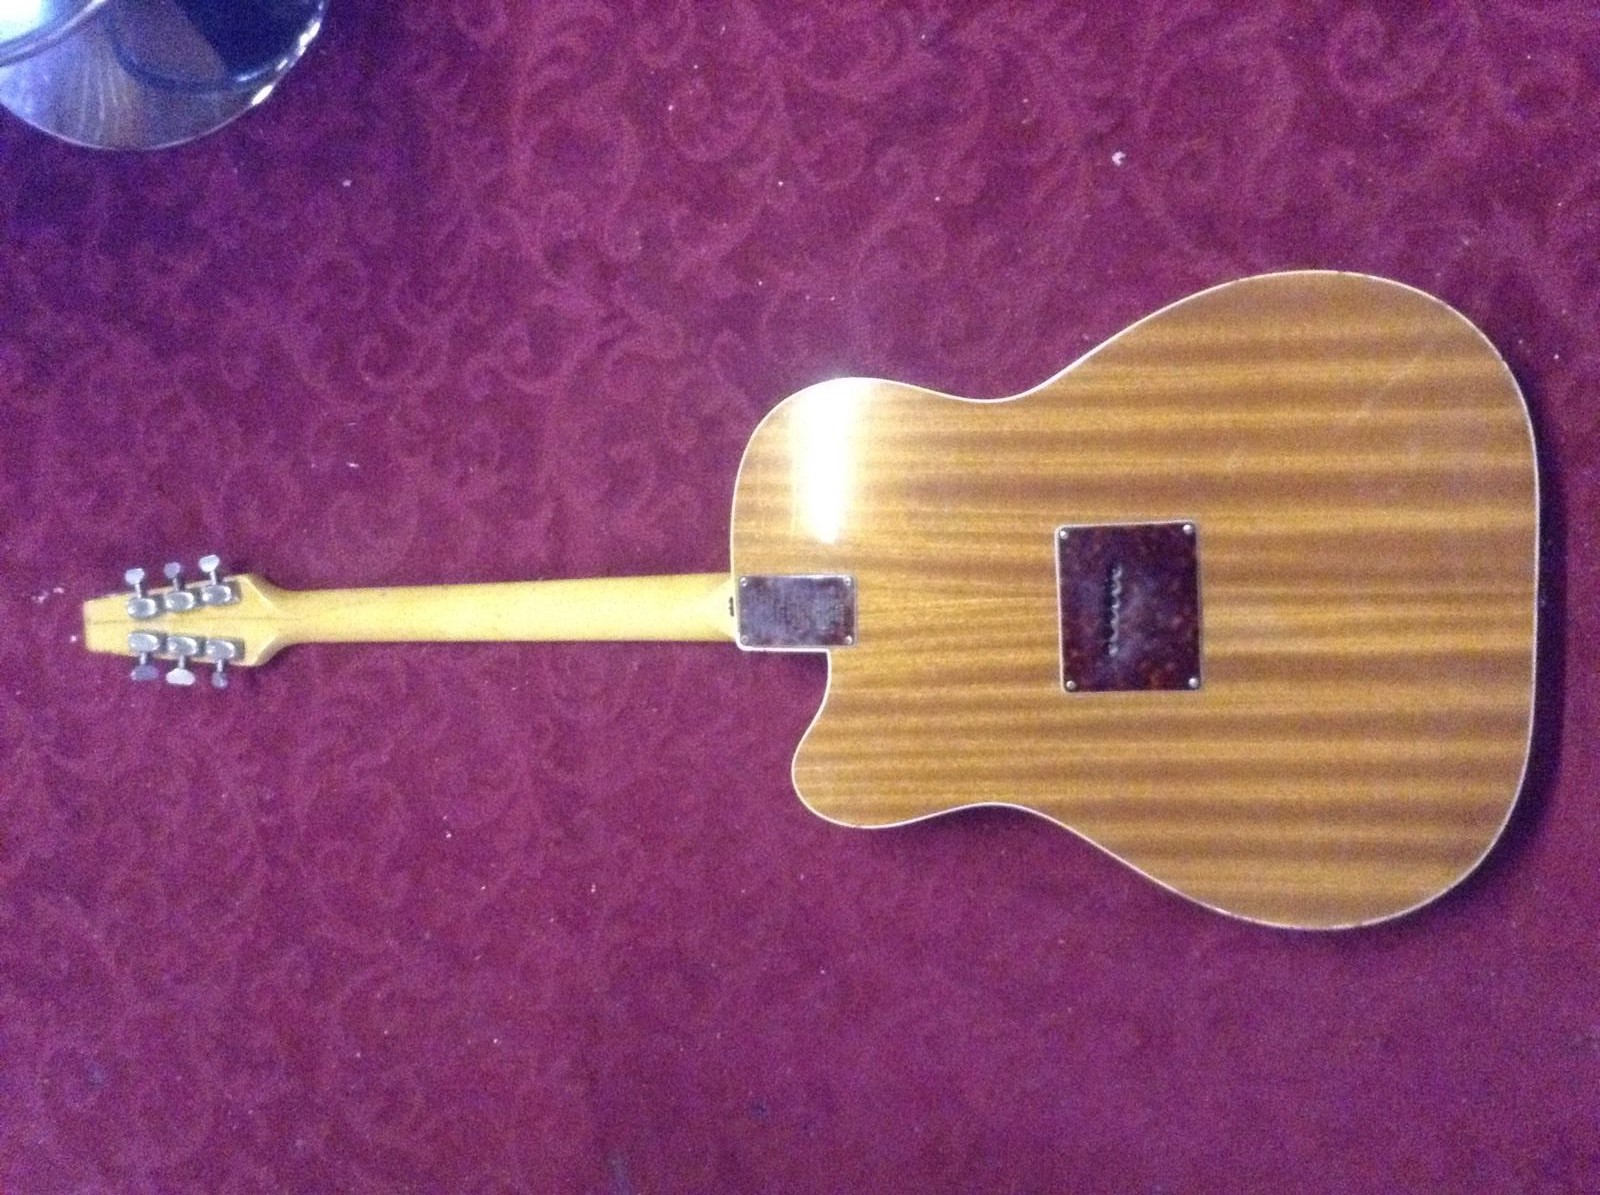 Baldwin Virginian Guitar